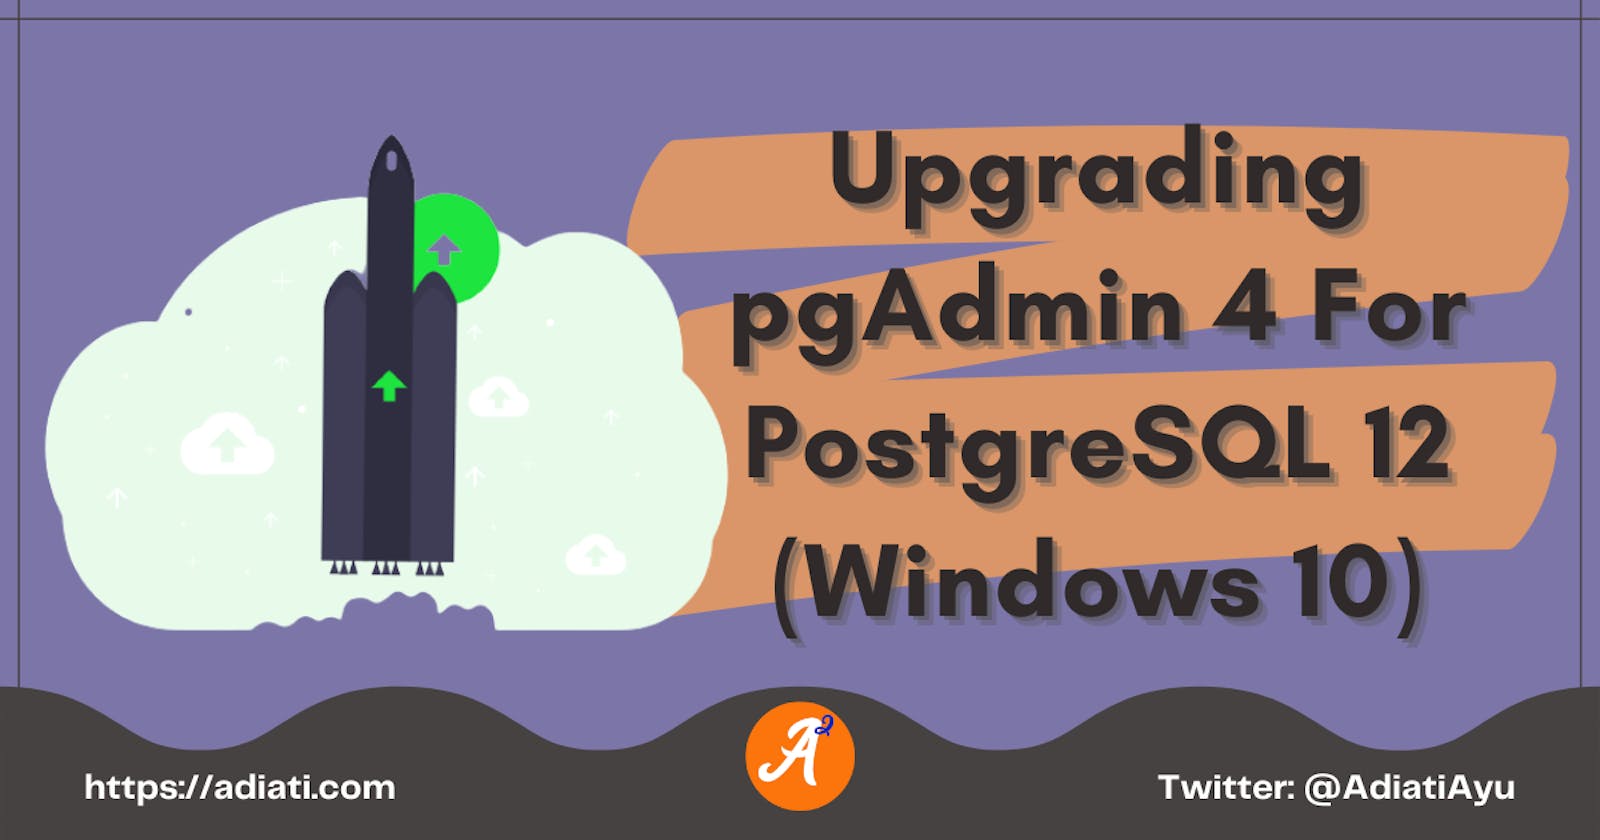 Upgrading pgAdmin 4 For PostgreSQL 12 (Windows 10)